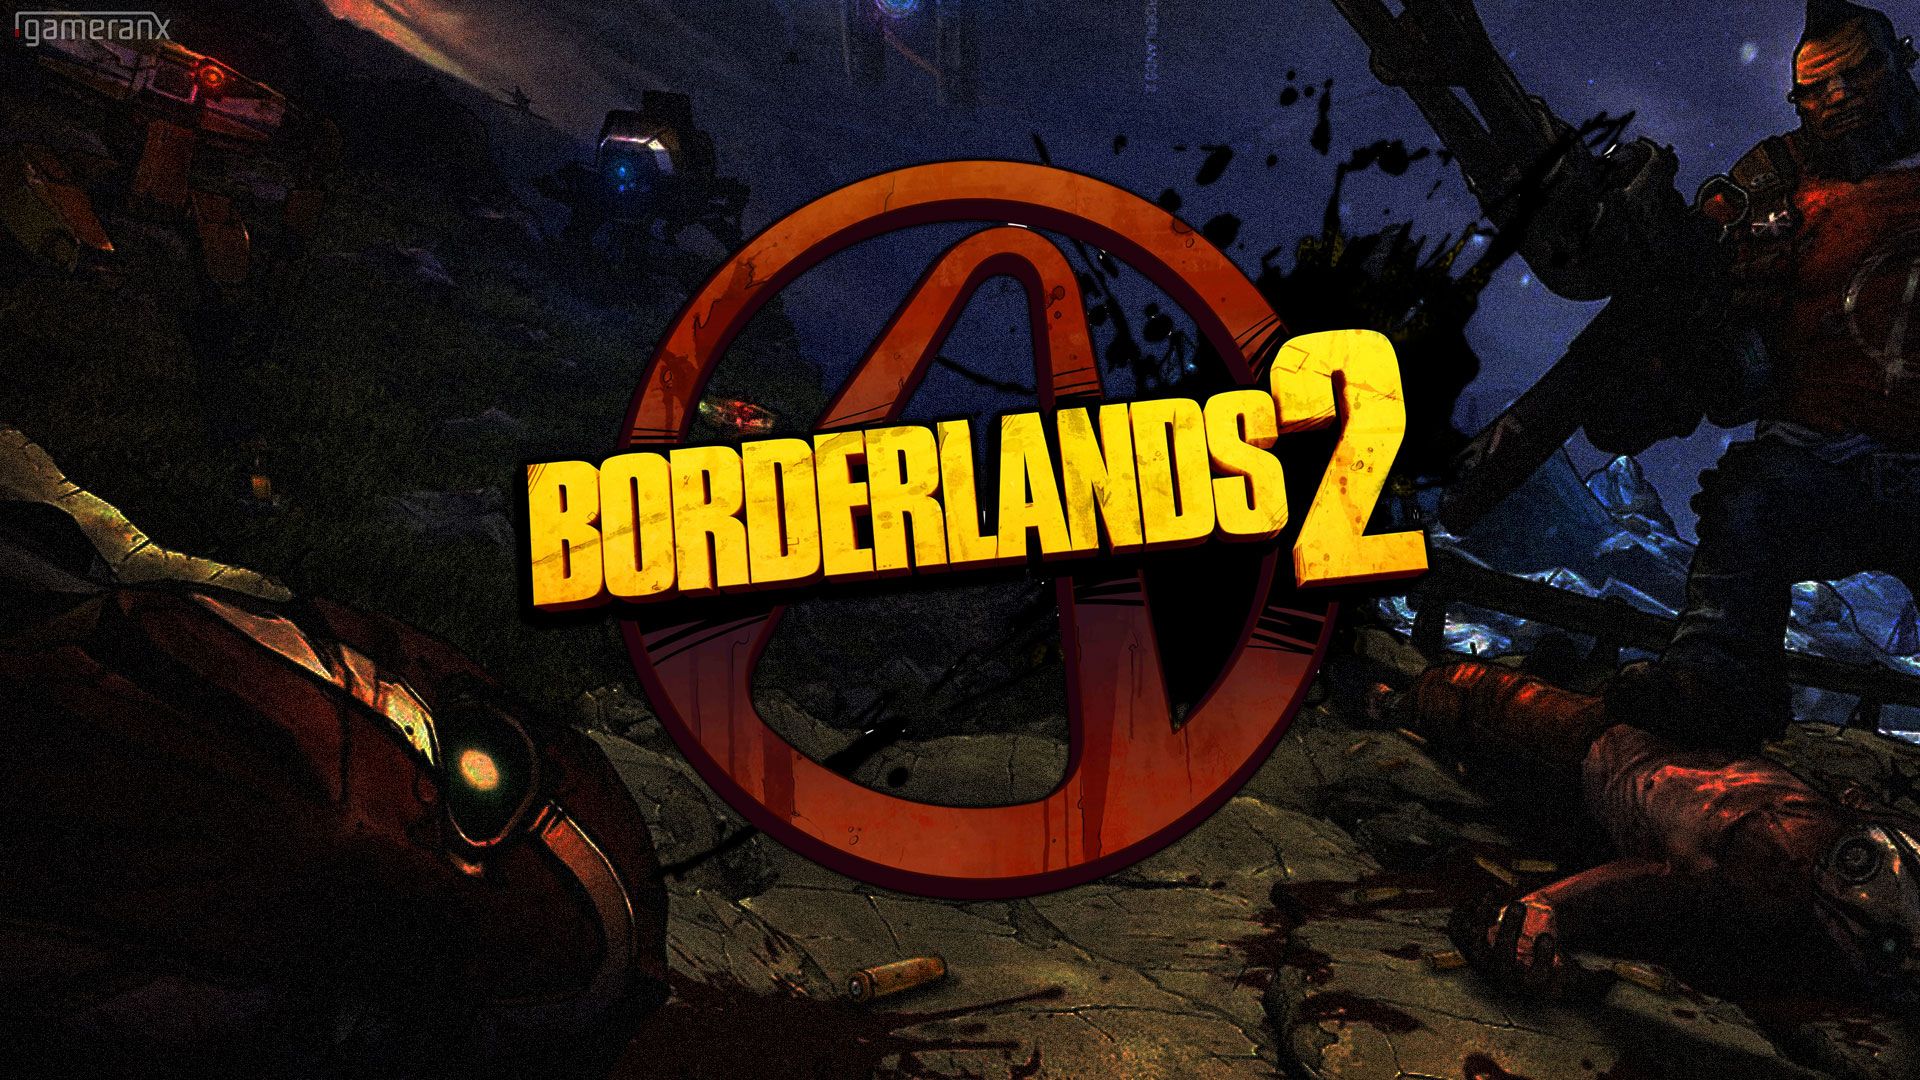 Borderlands 2 Wallpapers in HD | Game Blog